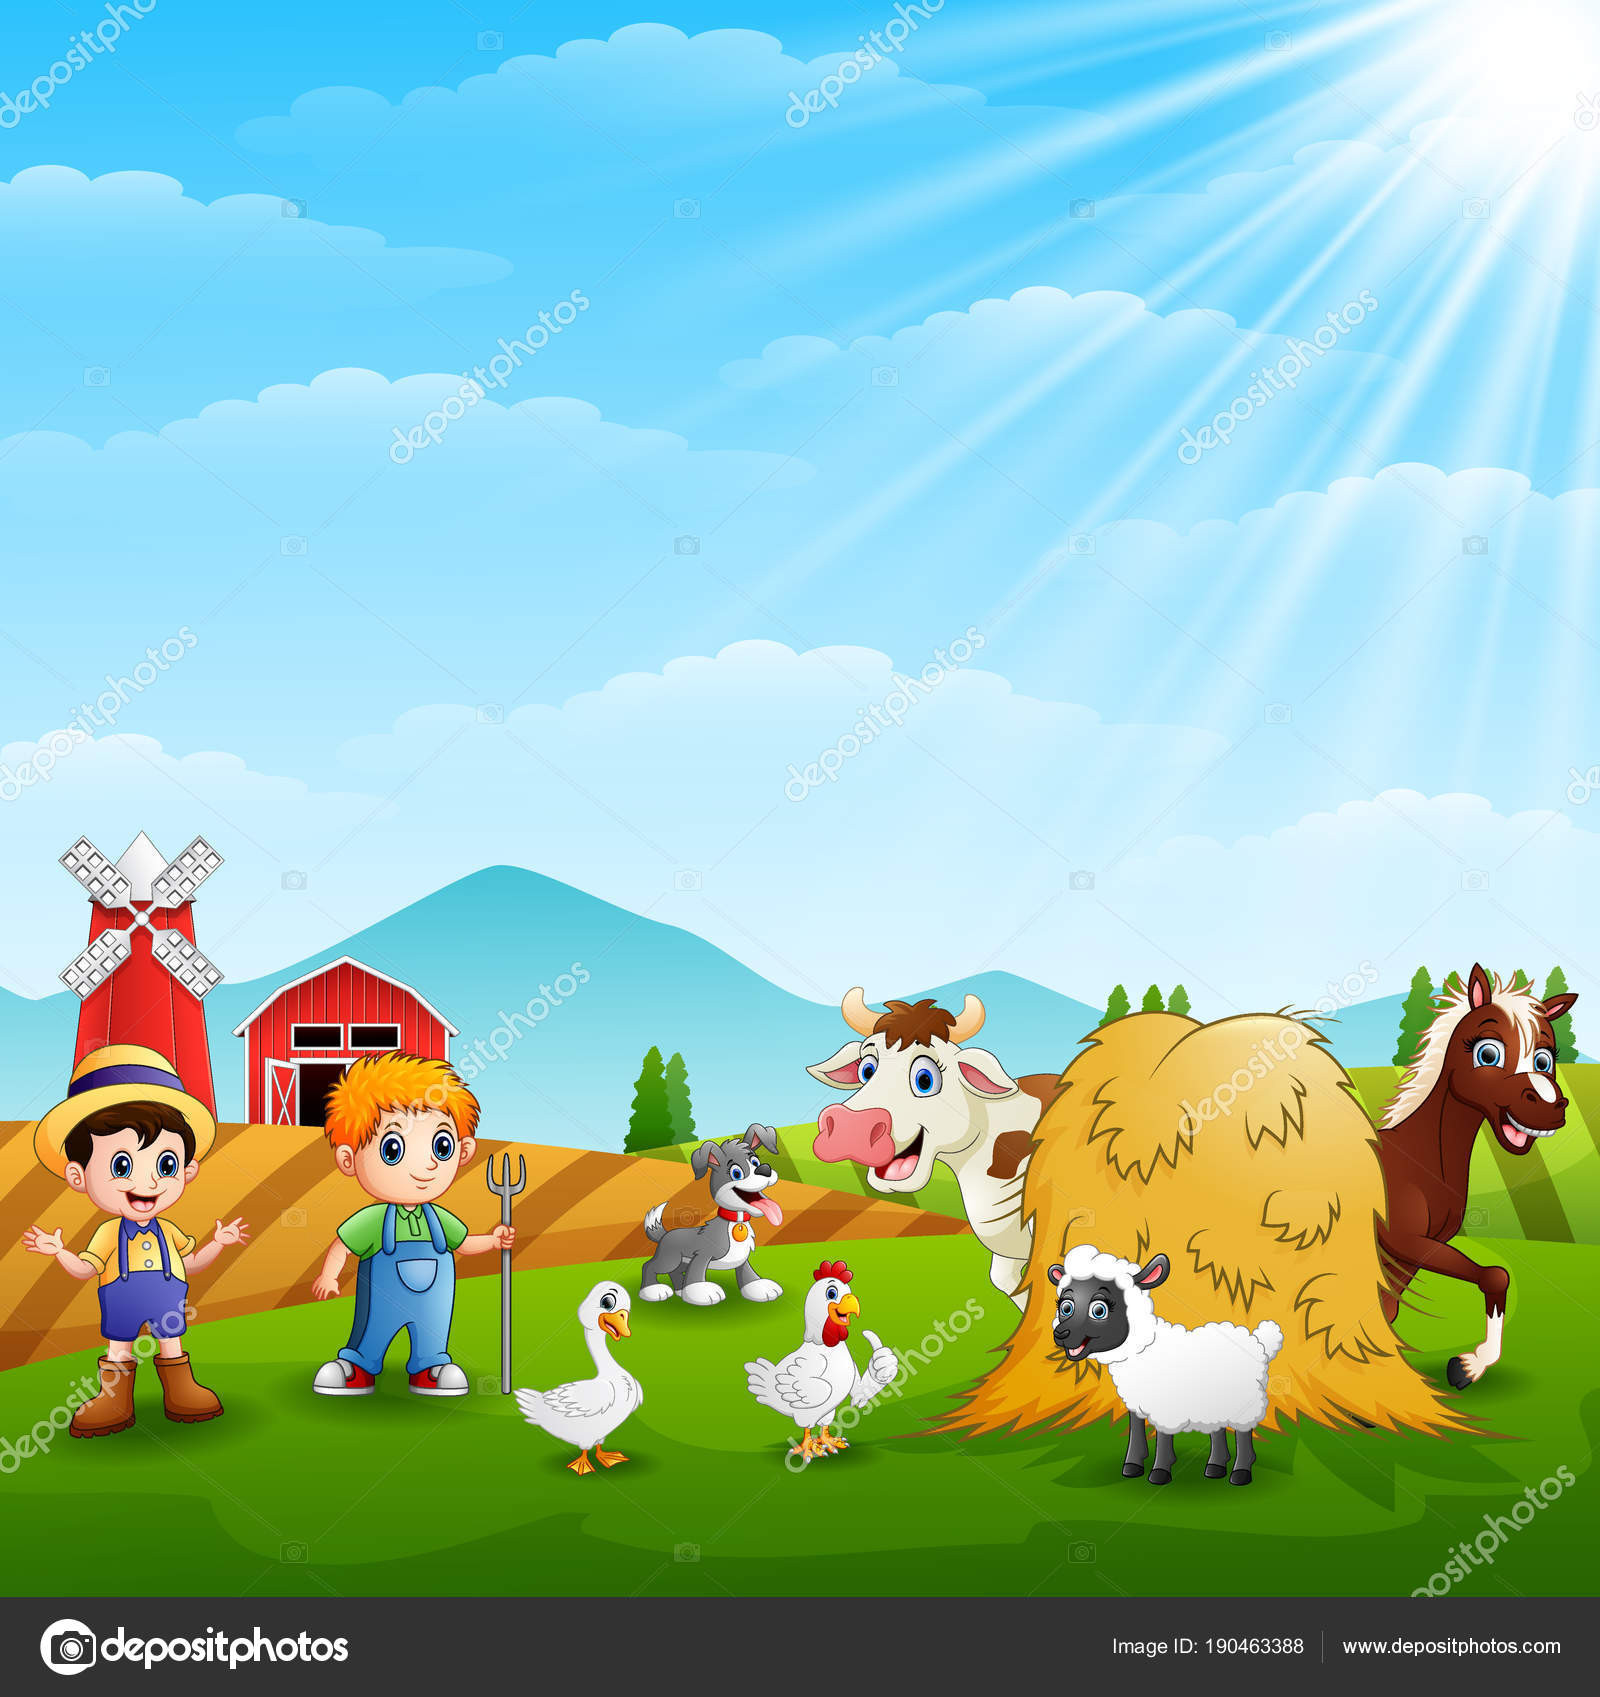 depositphotos stock illustration vector illustration farmers keeping animals